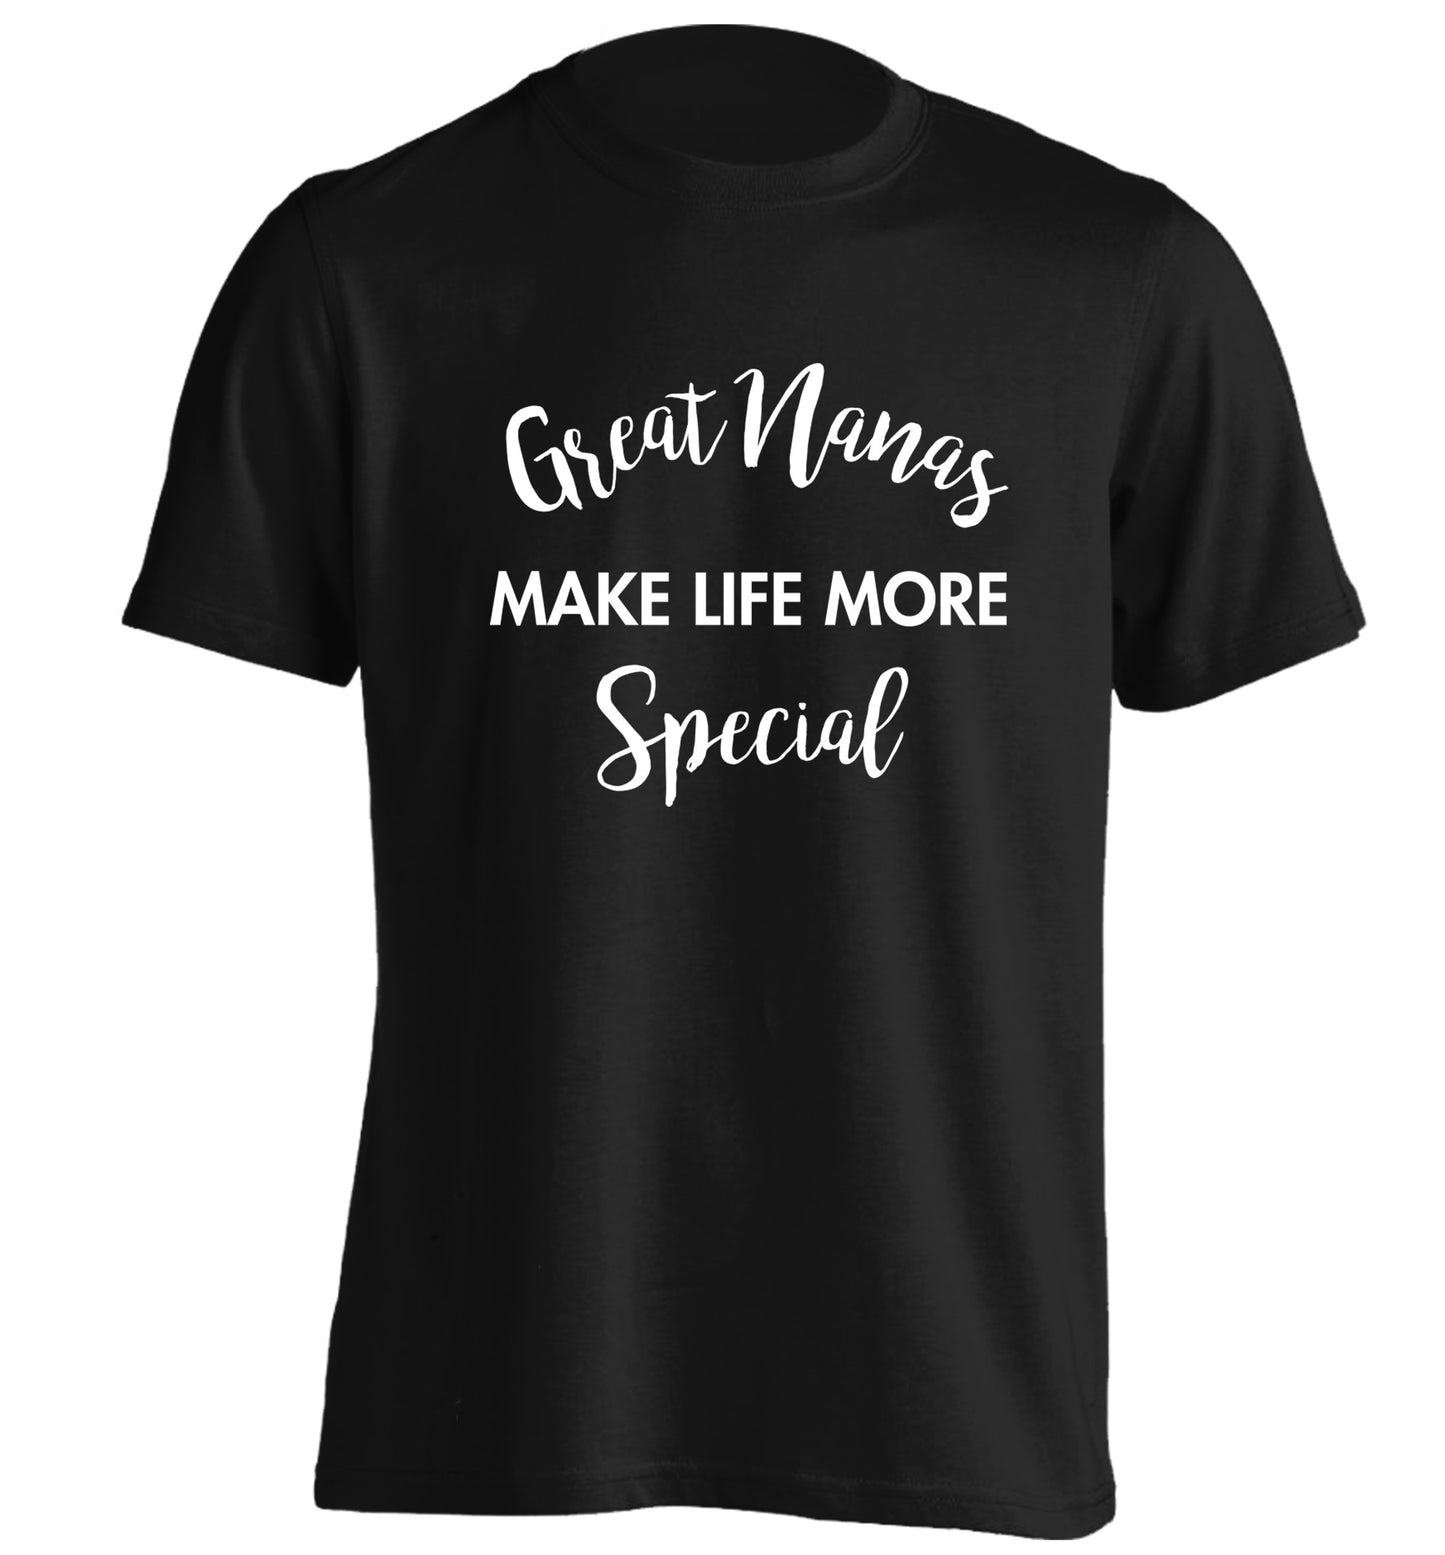 Great nanas make life more special adults unisex black Tshirt 2XL